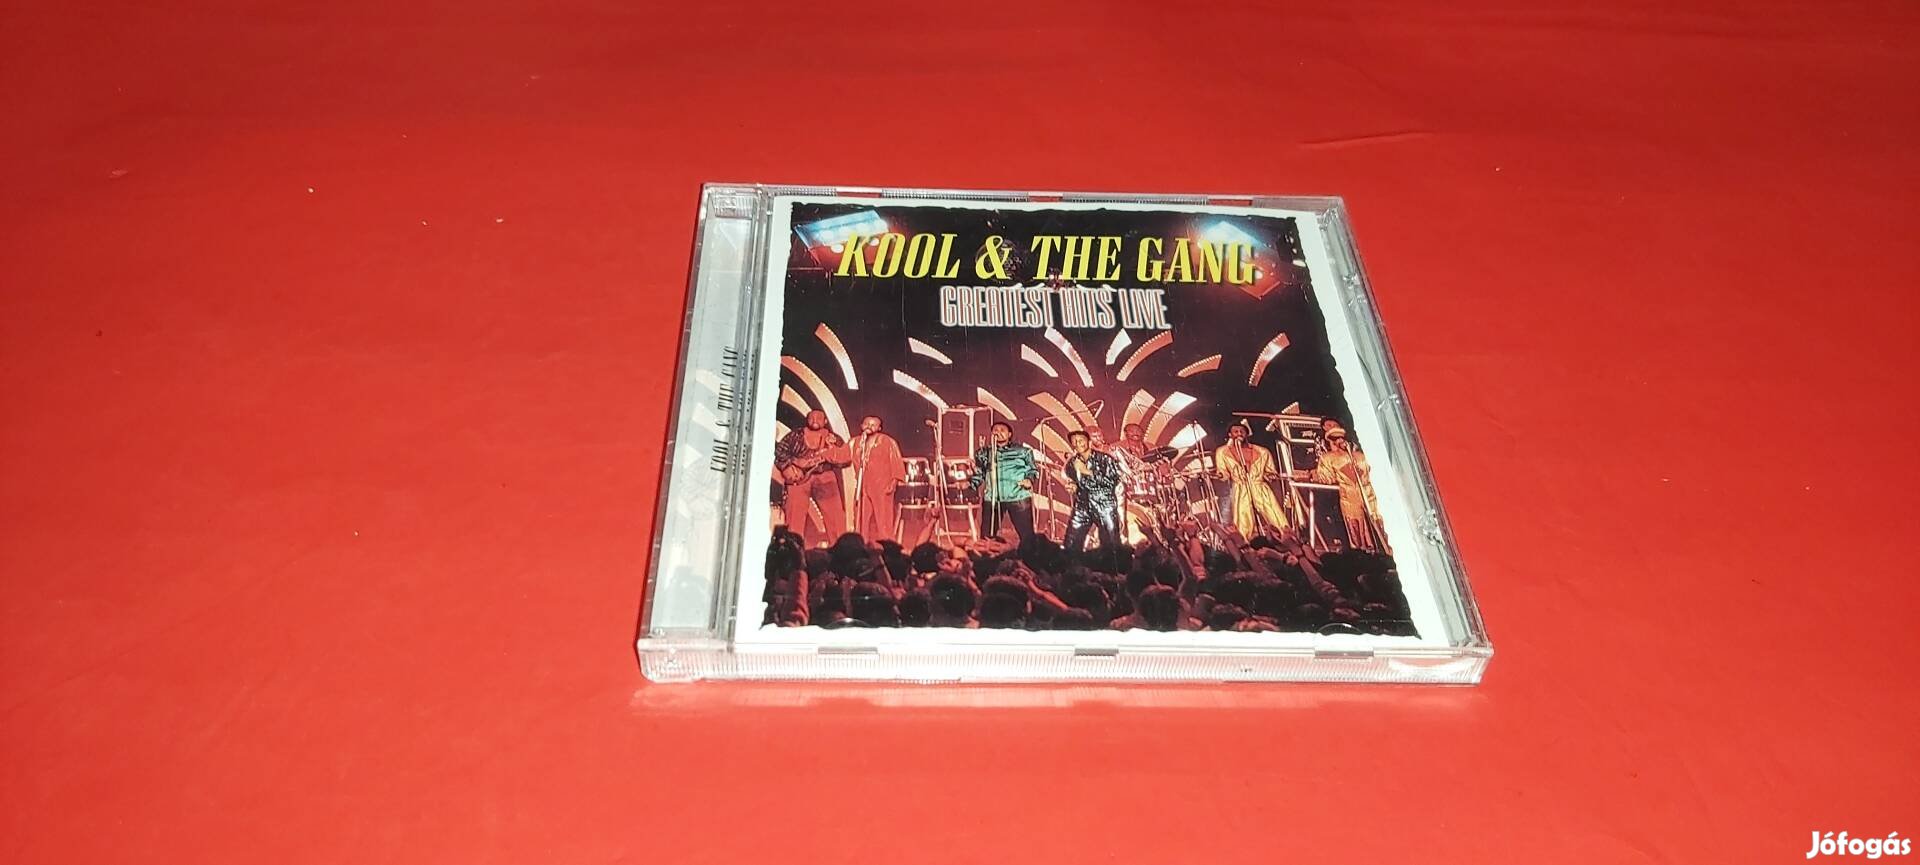 Kool & The Gang Greatest hits live Cd 1999